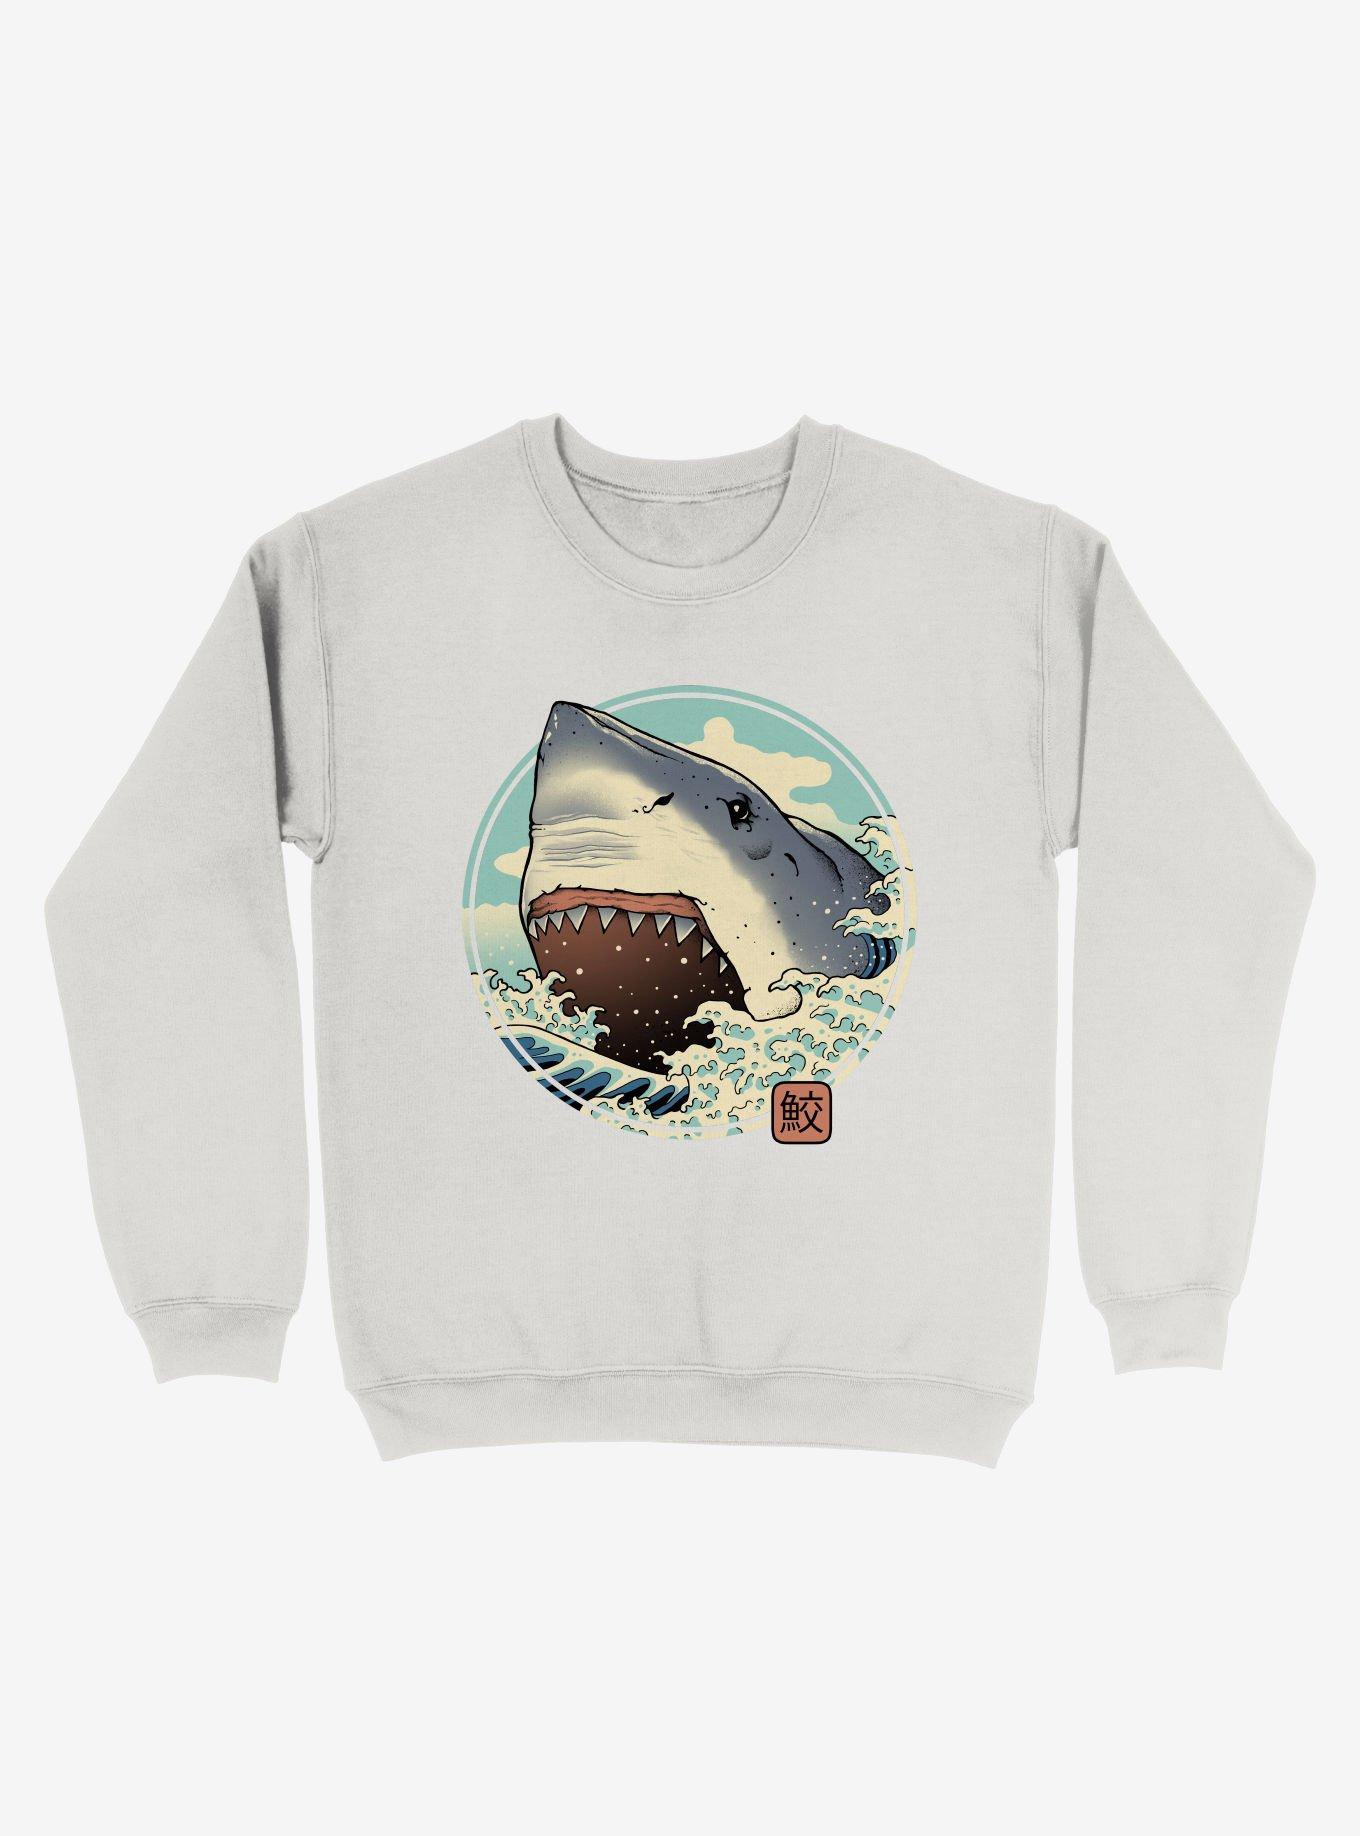 Shark Attack! Sweatshirt, WHITE, hi-res